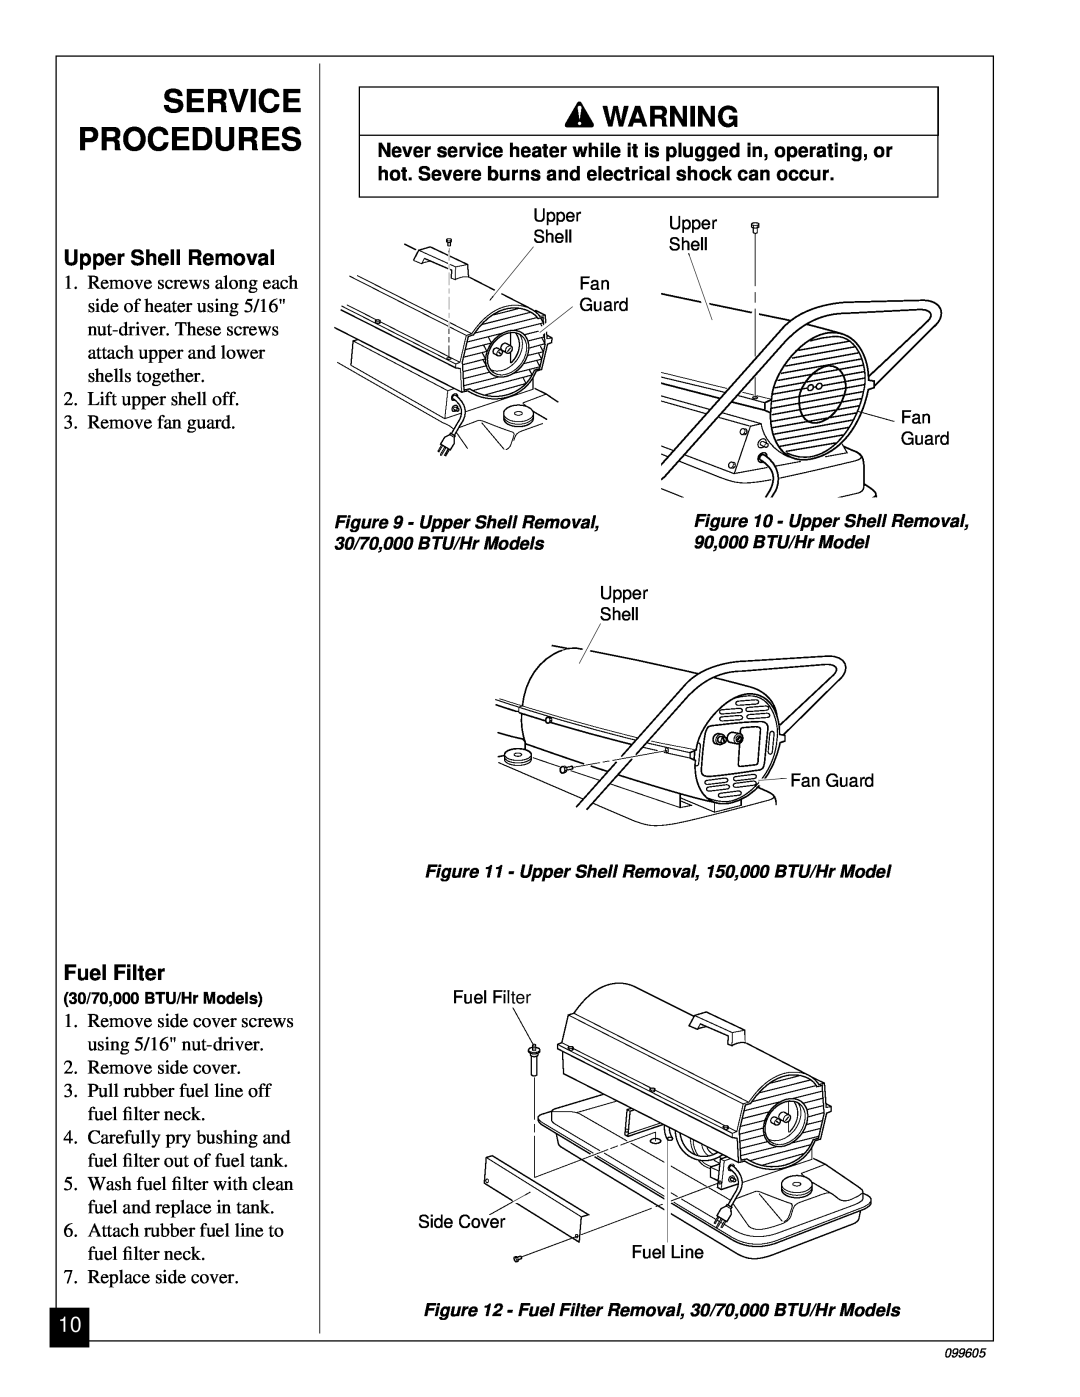 Desa H.S.I. Series owner manual Service Procedures, Upper Shell Removal, Fuel Filter 